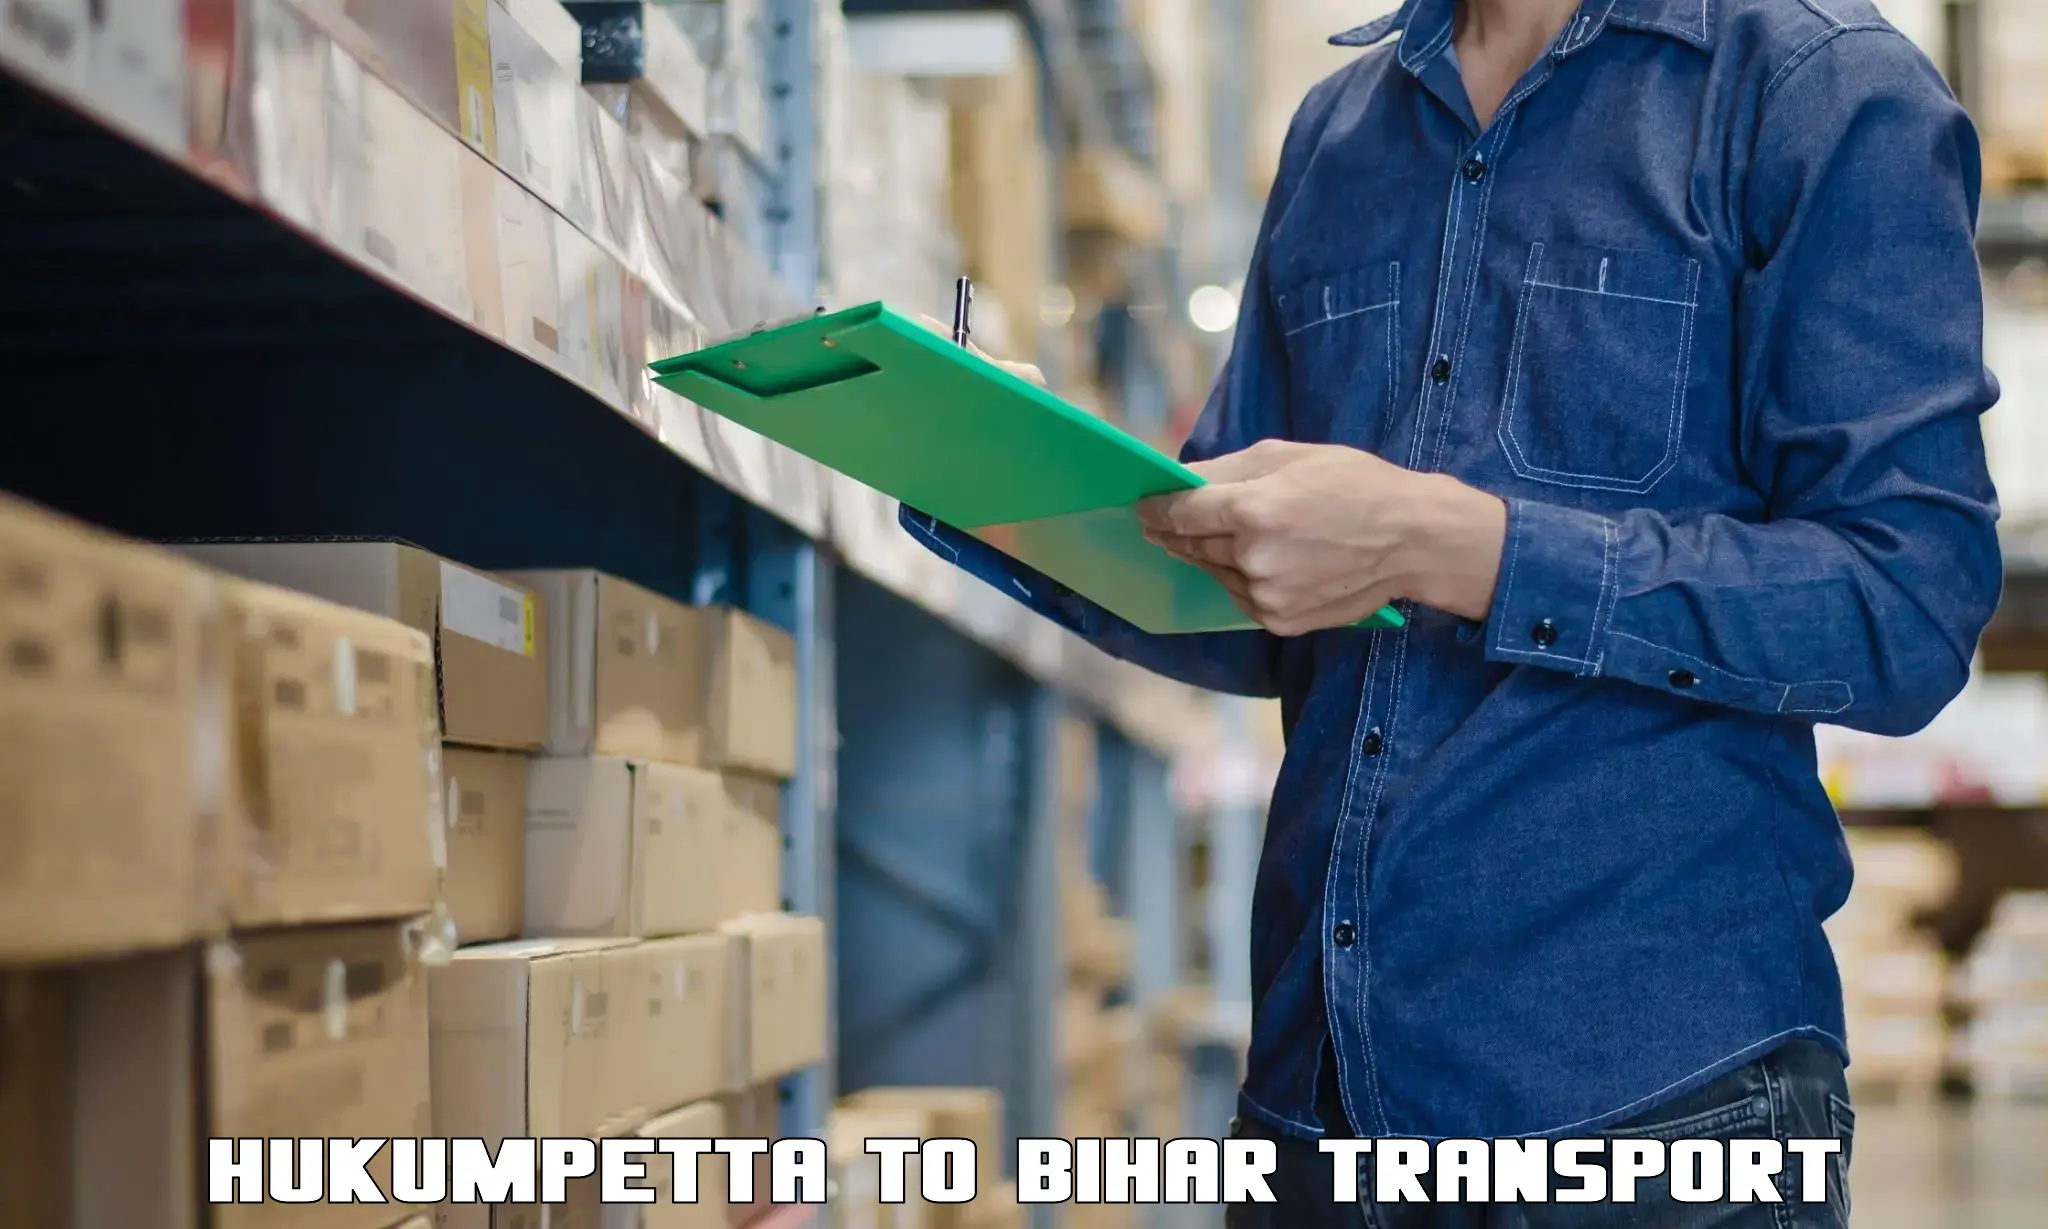 Furniture transport service Hukumpetta to Barhiya